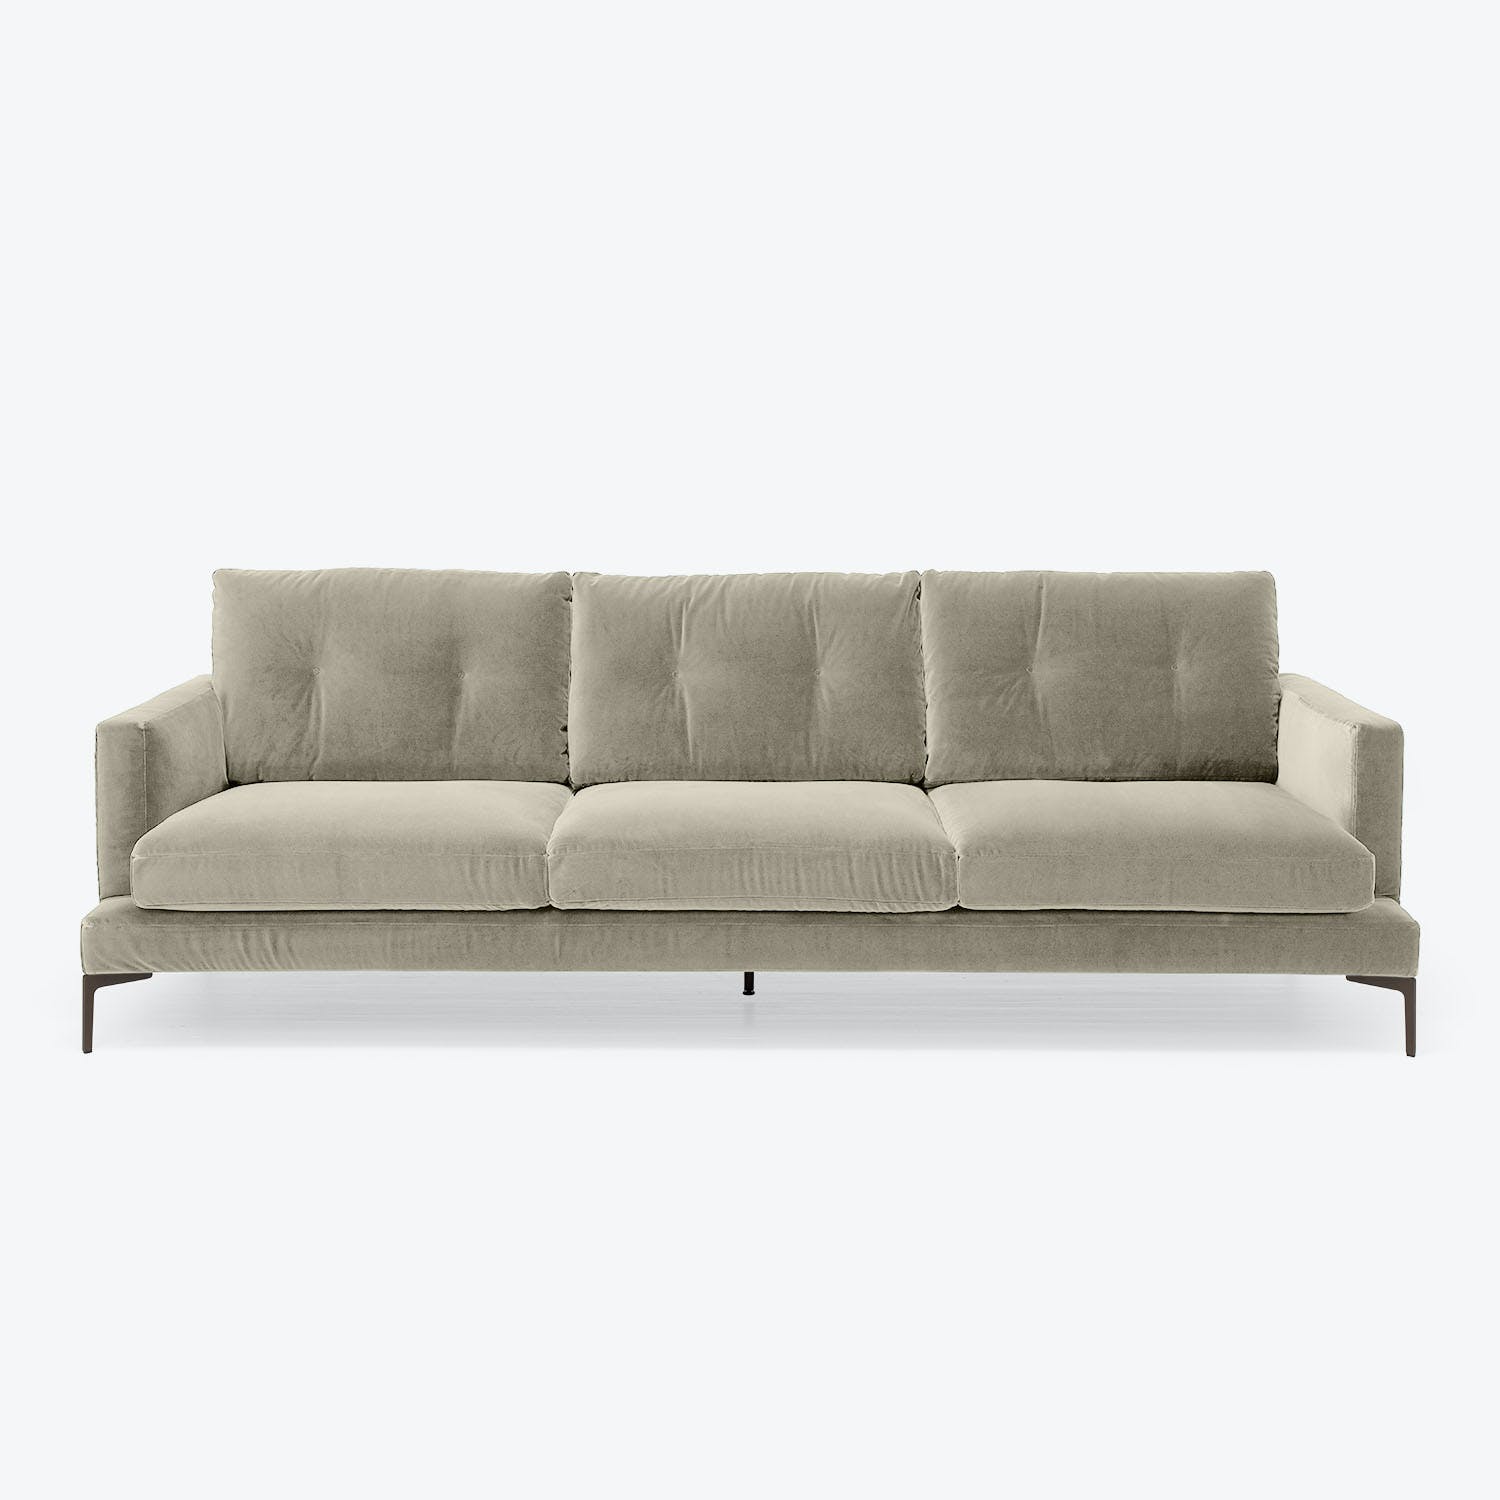 Modern, minimalist sofa with plush cushions and sleek design